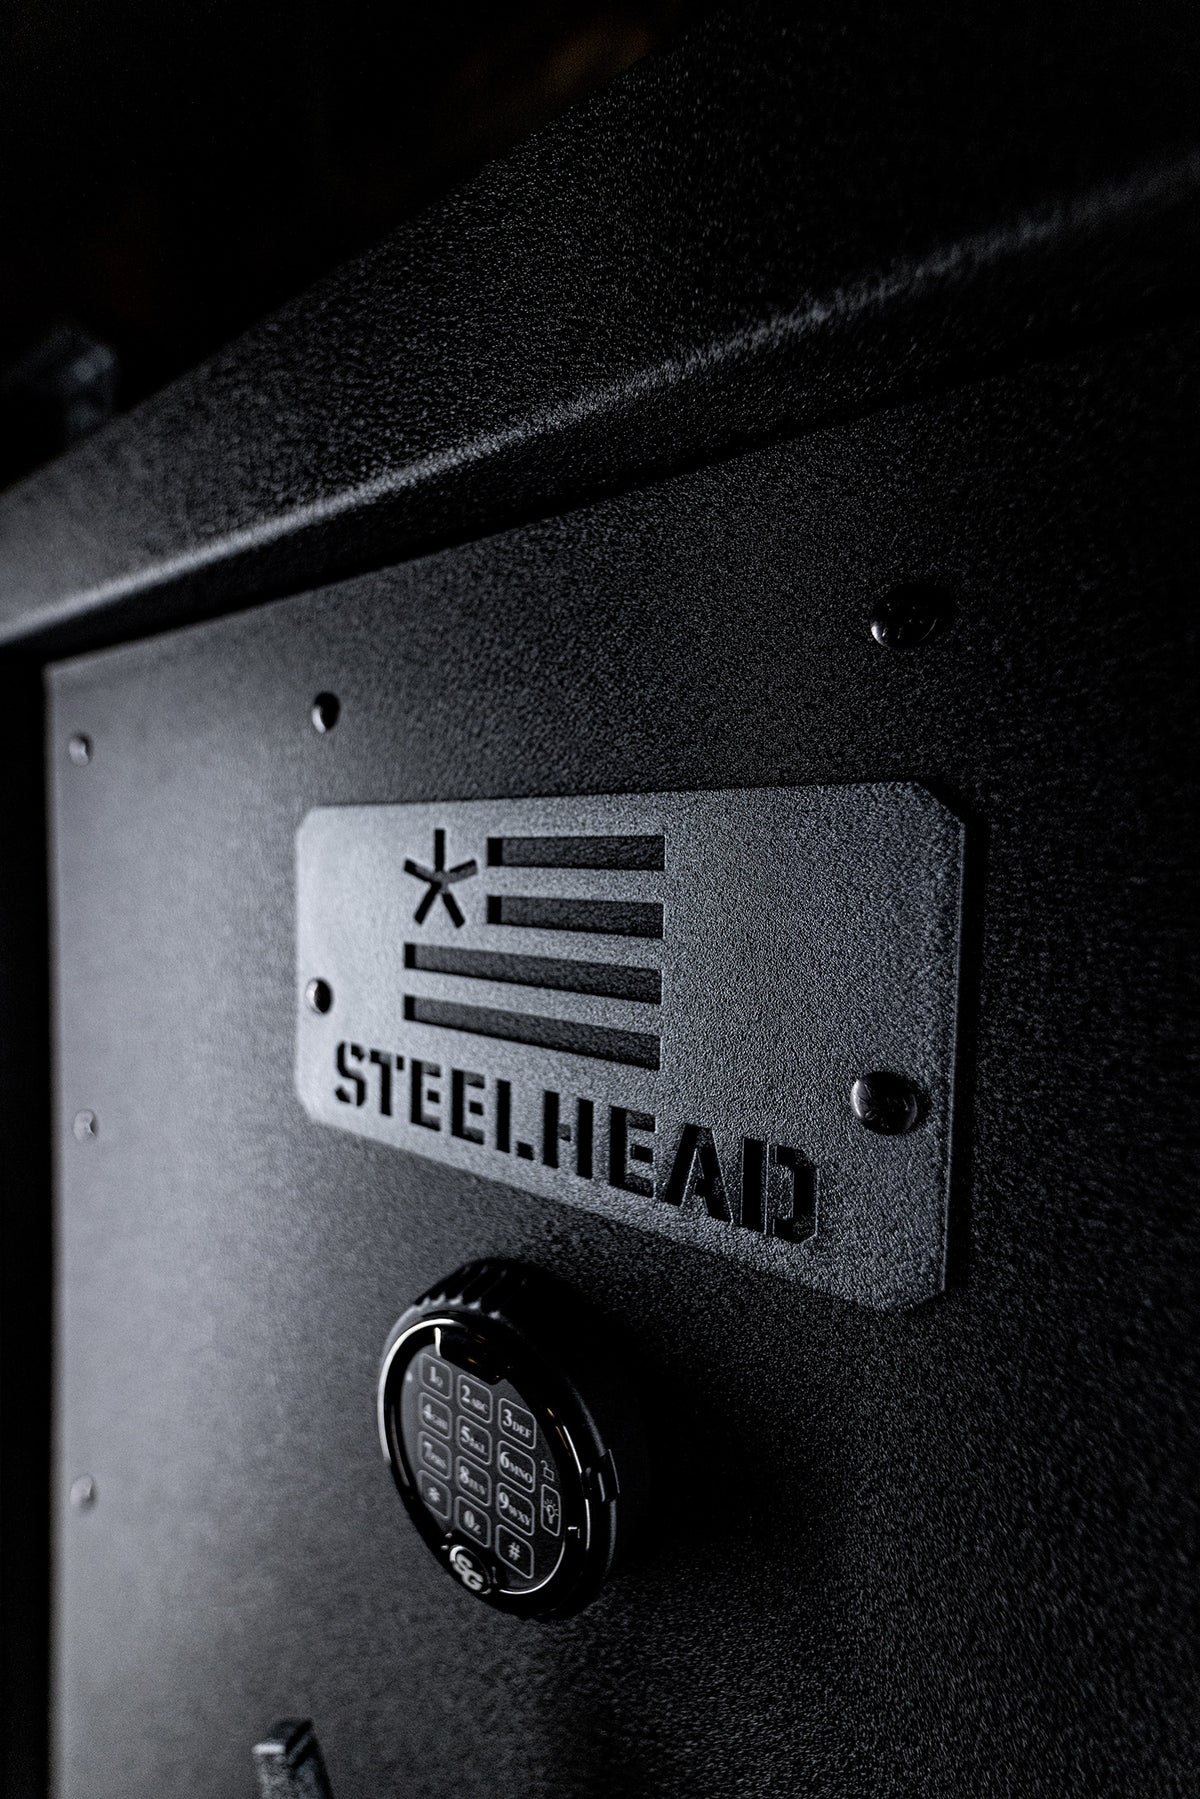 Steelhead Recon 38 Modular Gun Safe Logo and Digital Lock